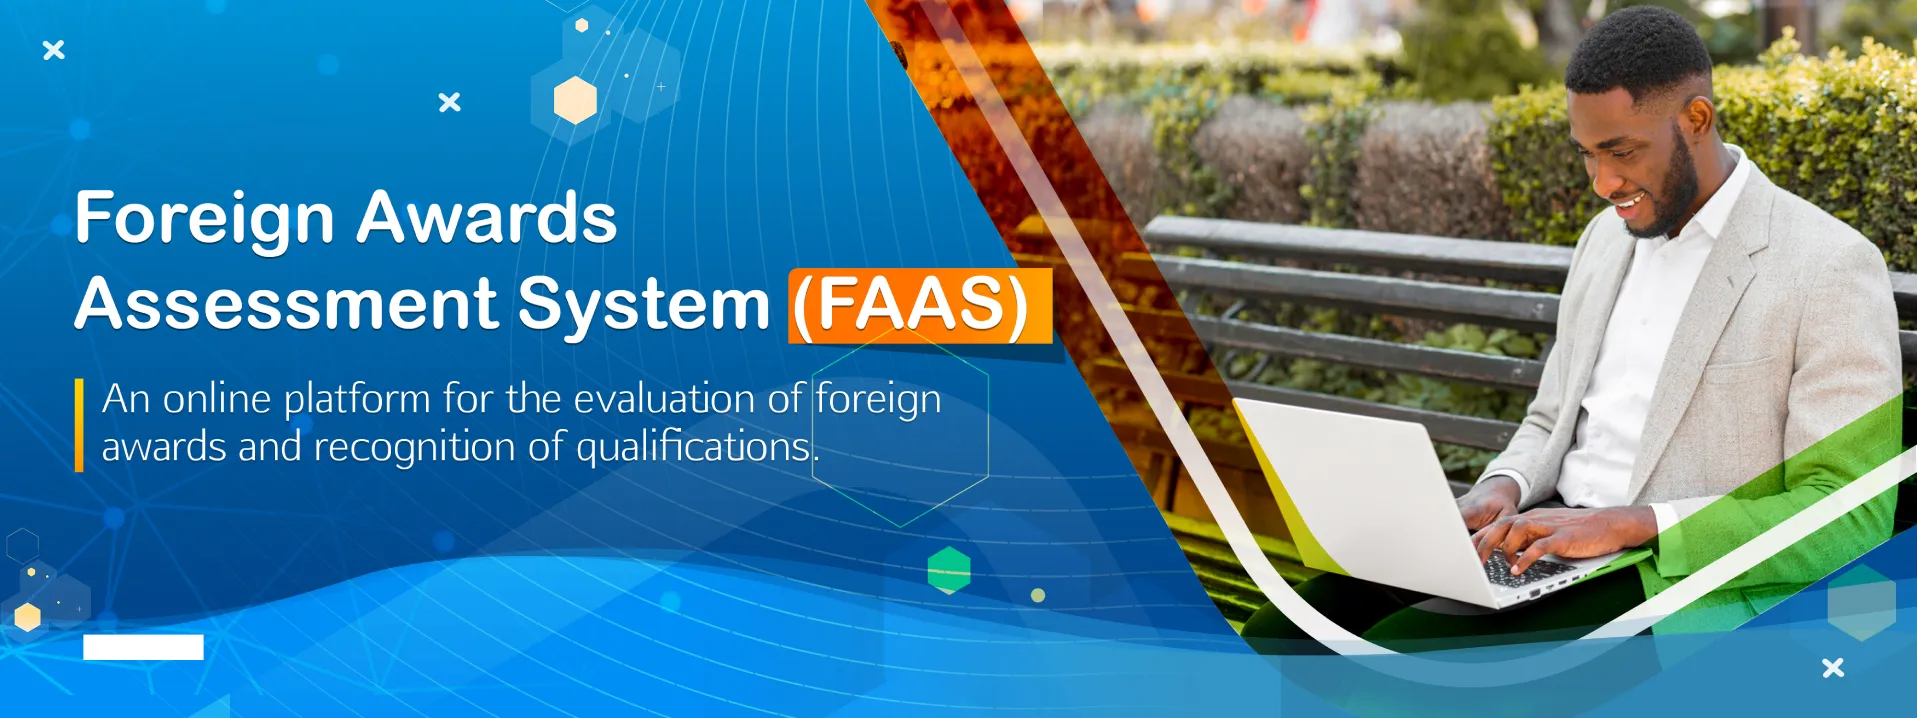 Foreign Awards Assessment System